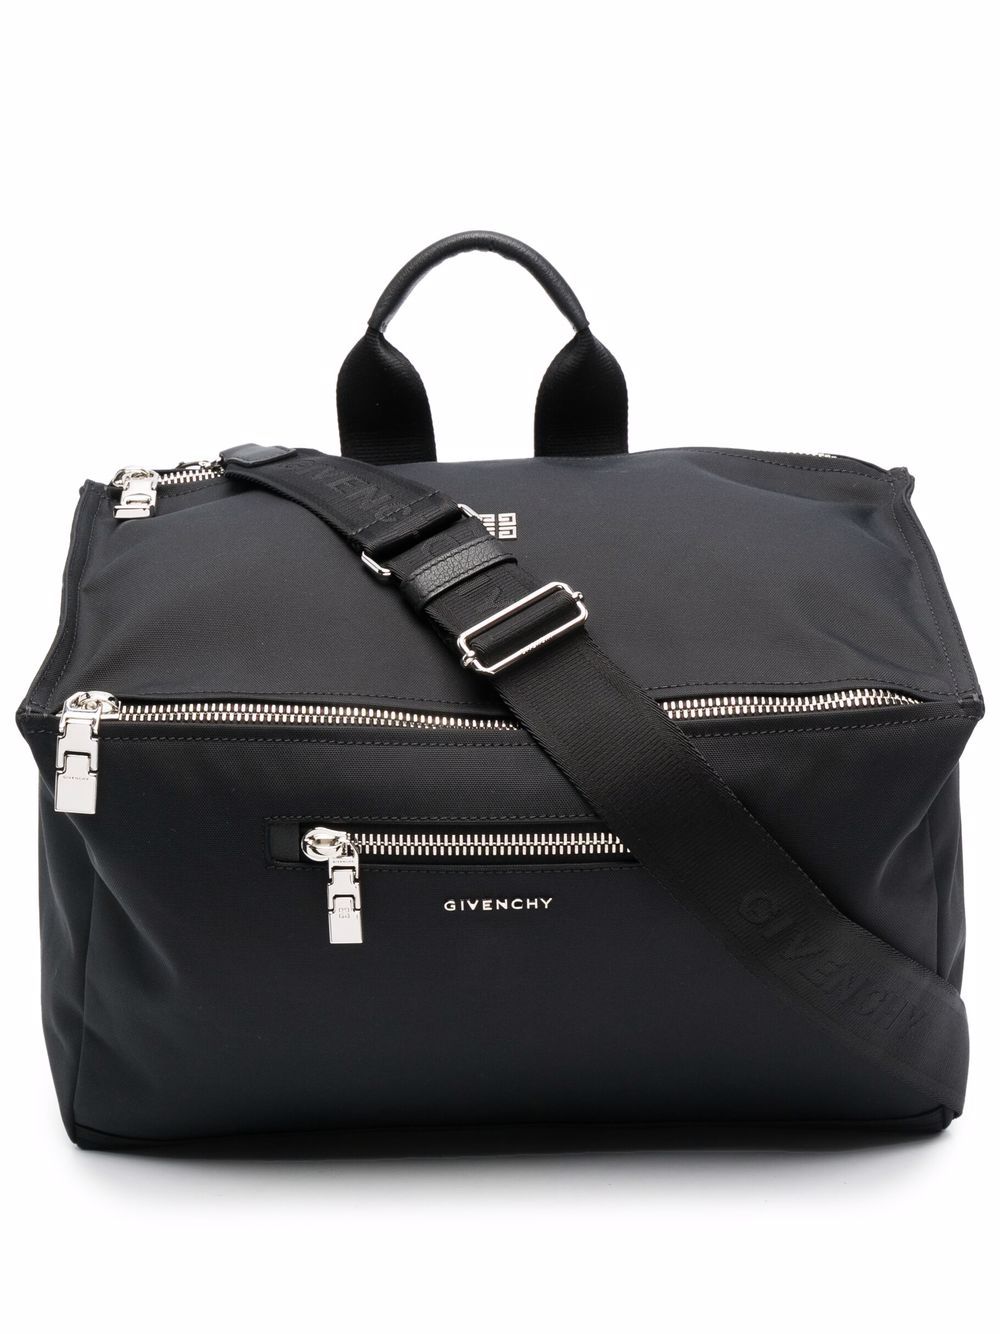 Givenchy - multi-strap tote bag - men - Cotton/Polyurethane/Polyamide - One Size - Black